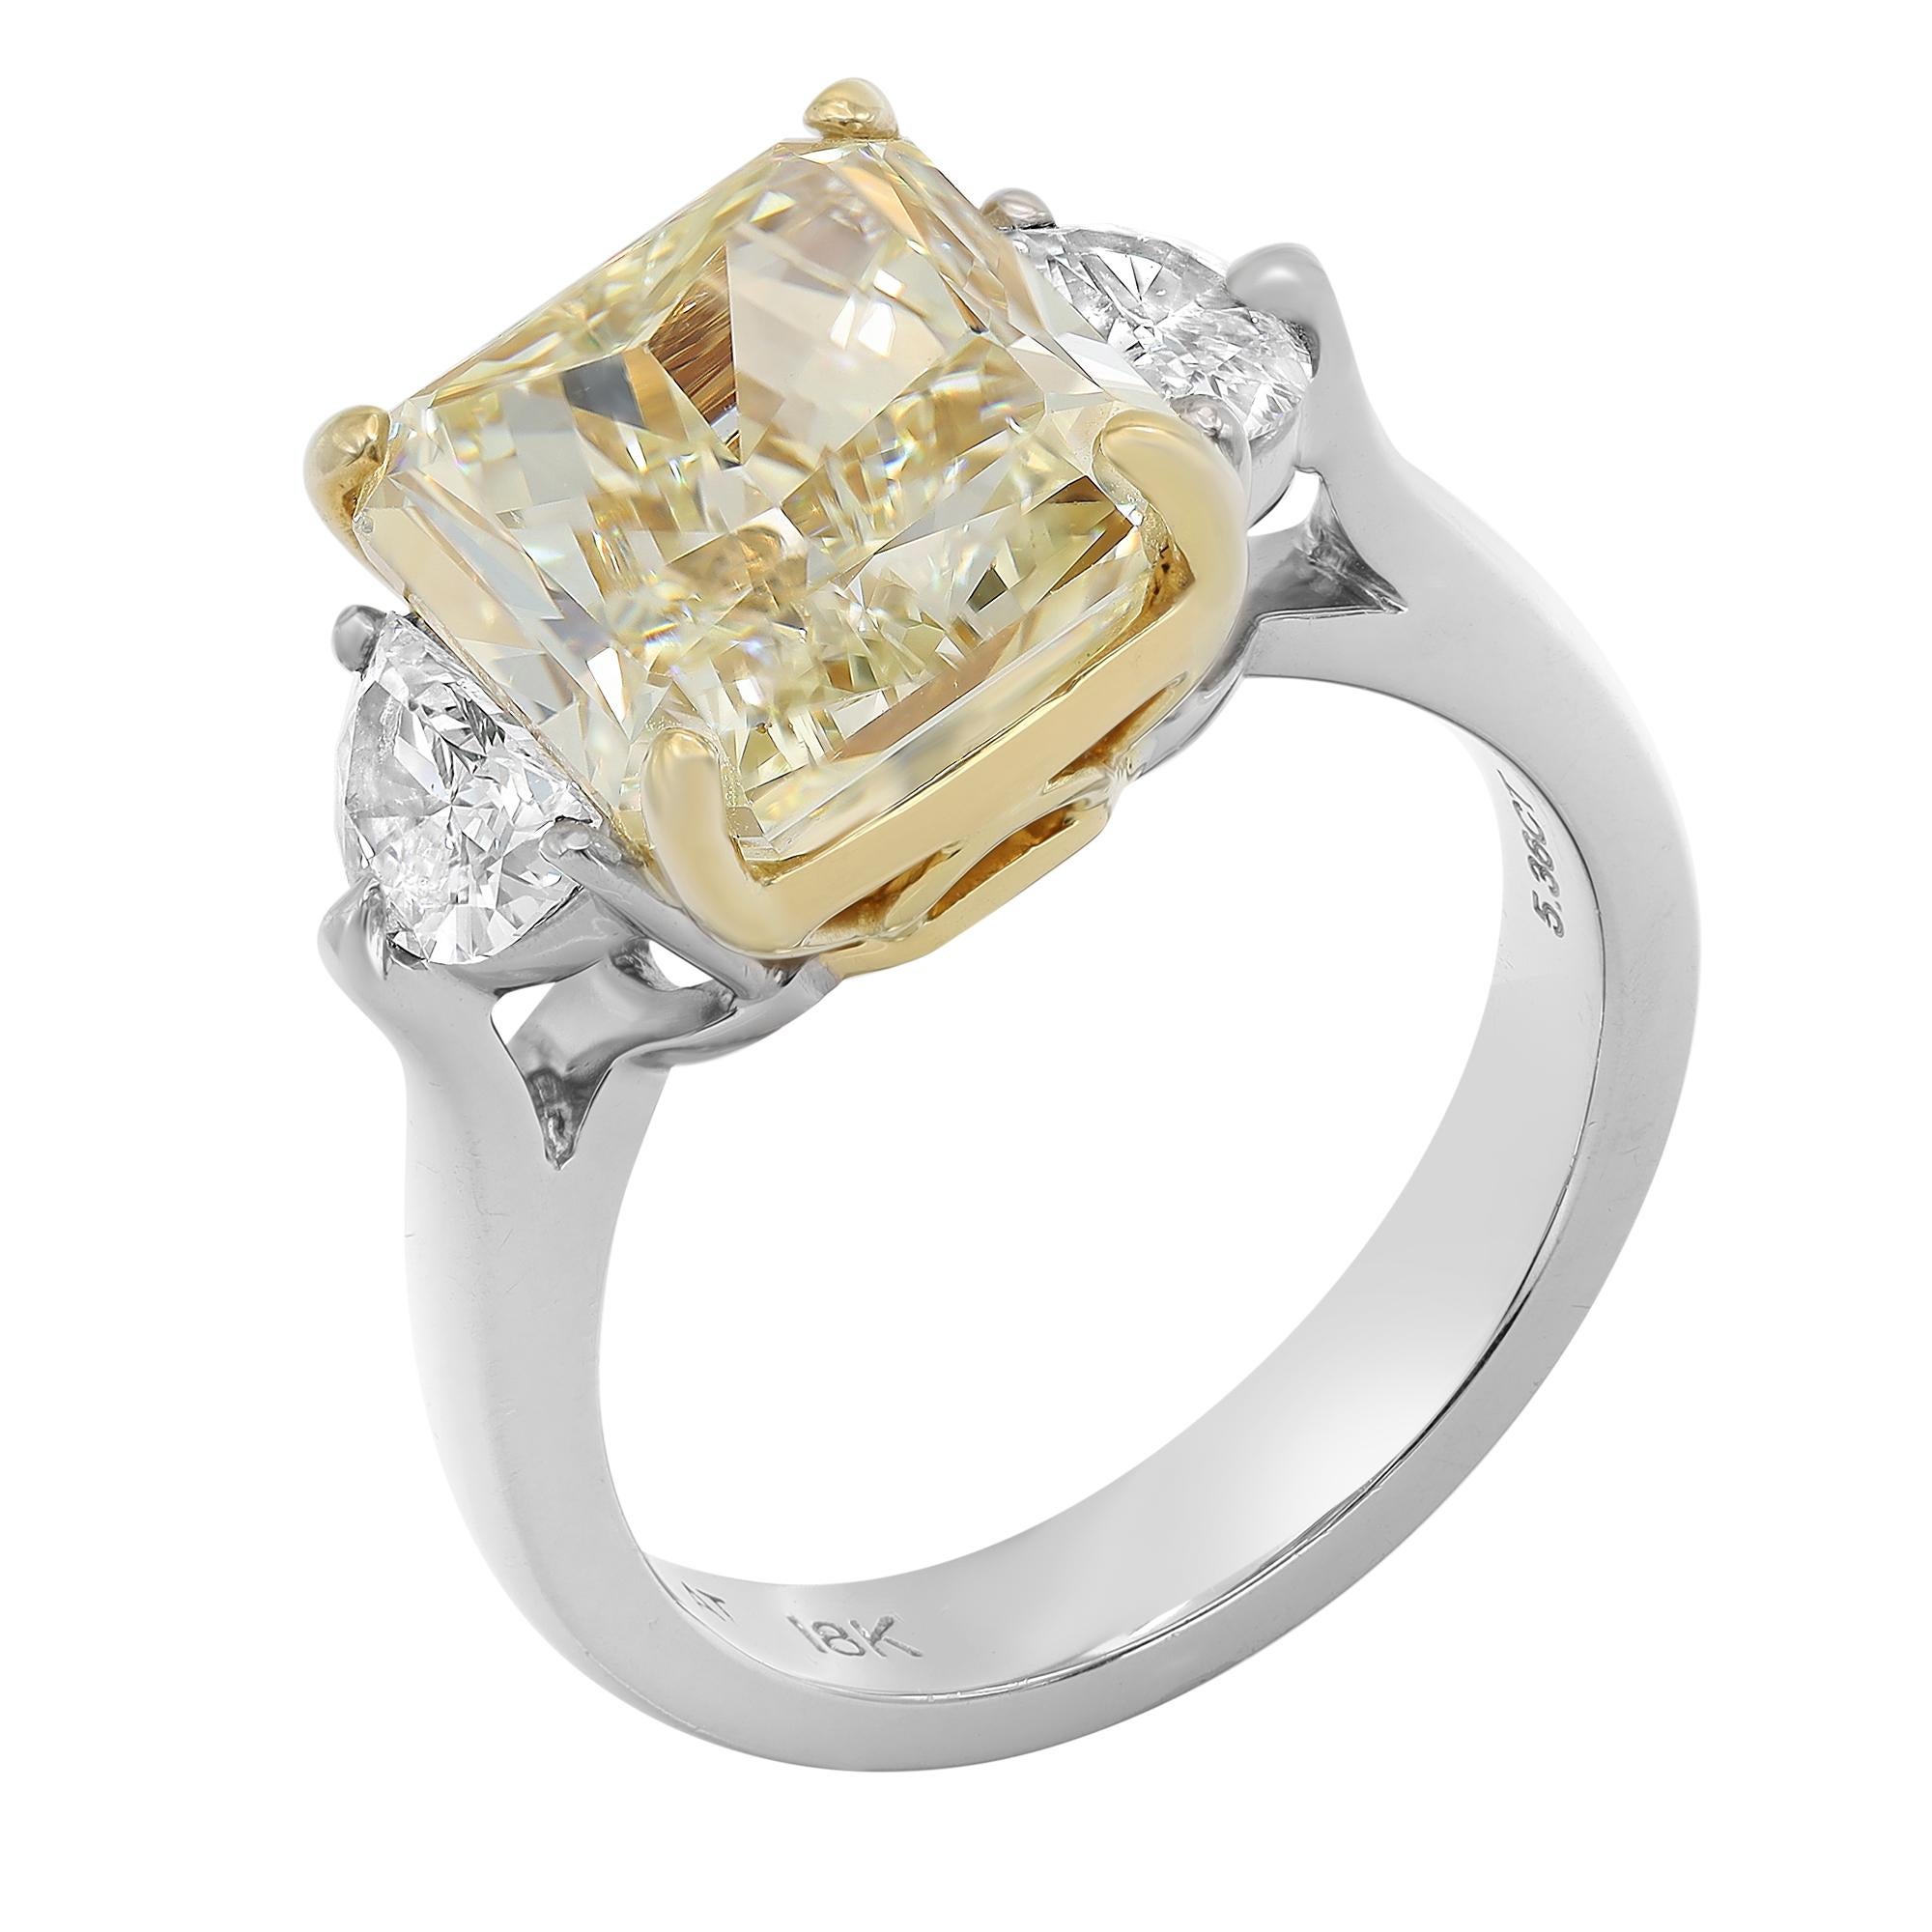 Taille princesse Bague diamant jaune clair taille princesse Platine Or jaune 18K 5,36cts en vente